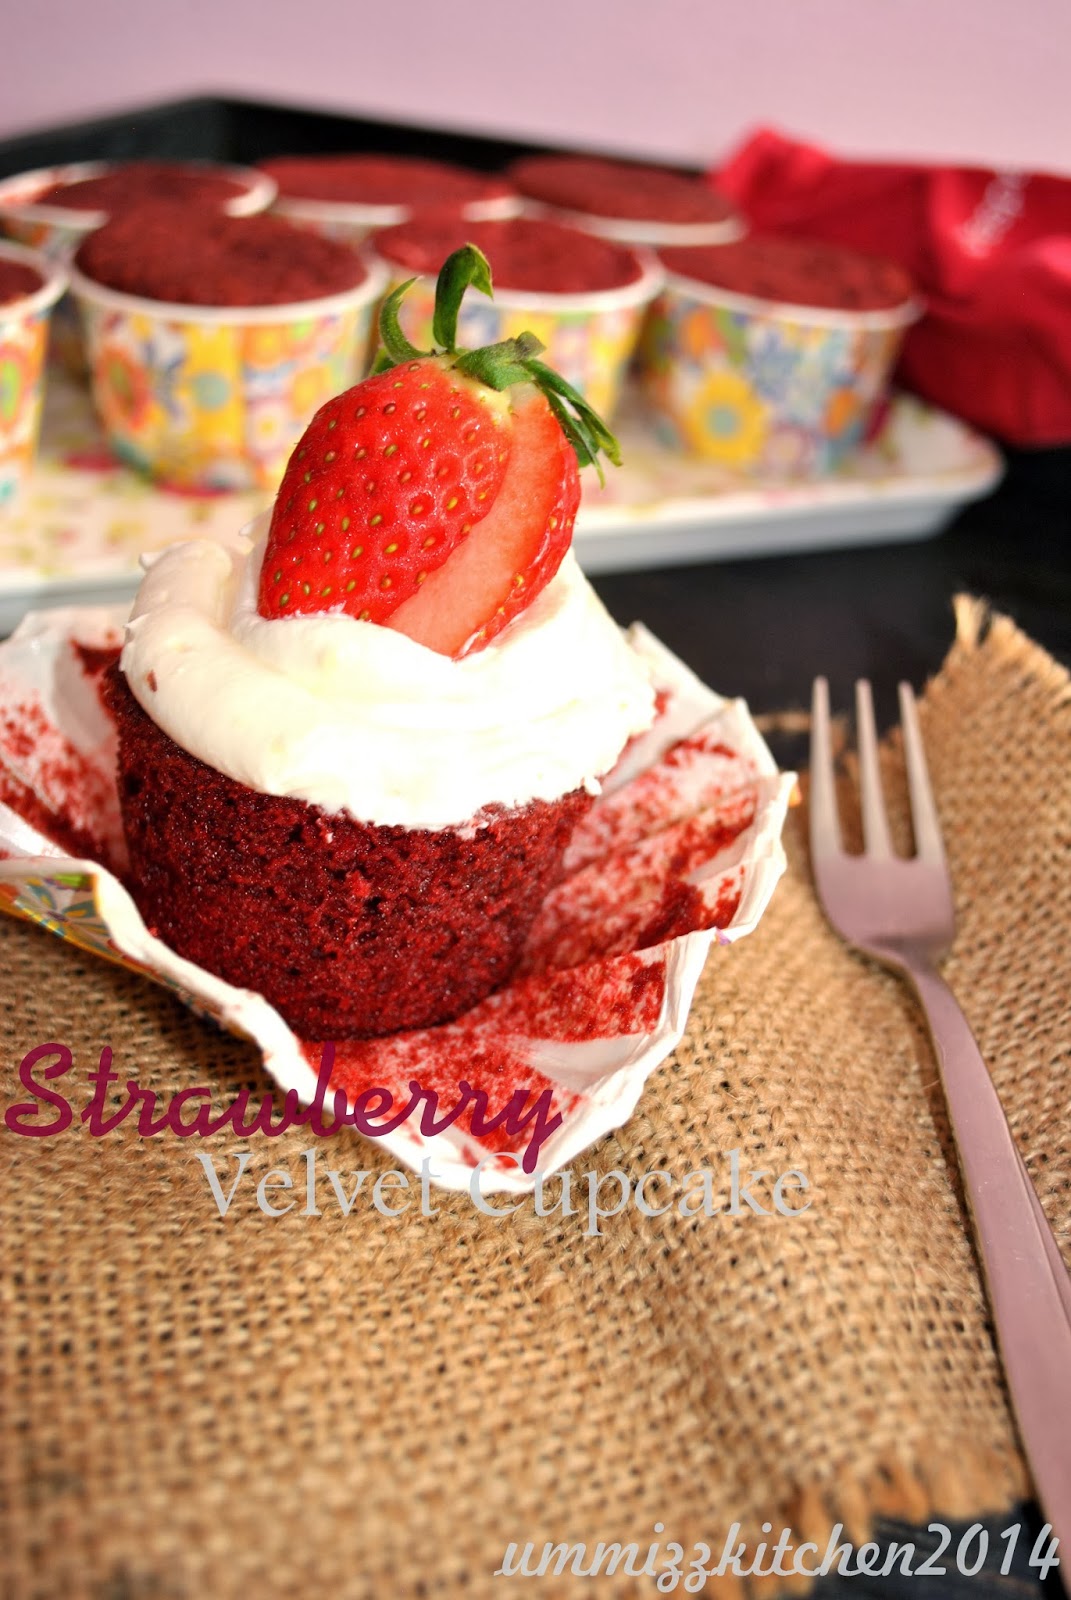 Ummizzkitchen: Strawberry Velvet Cupcake